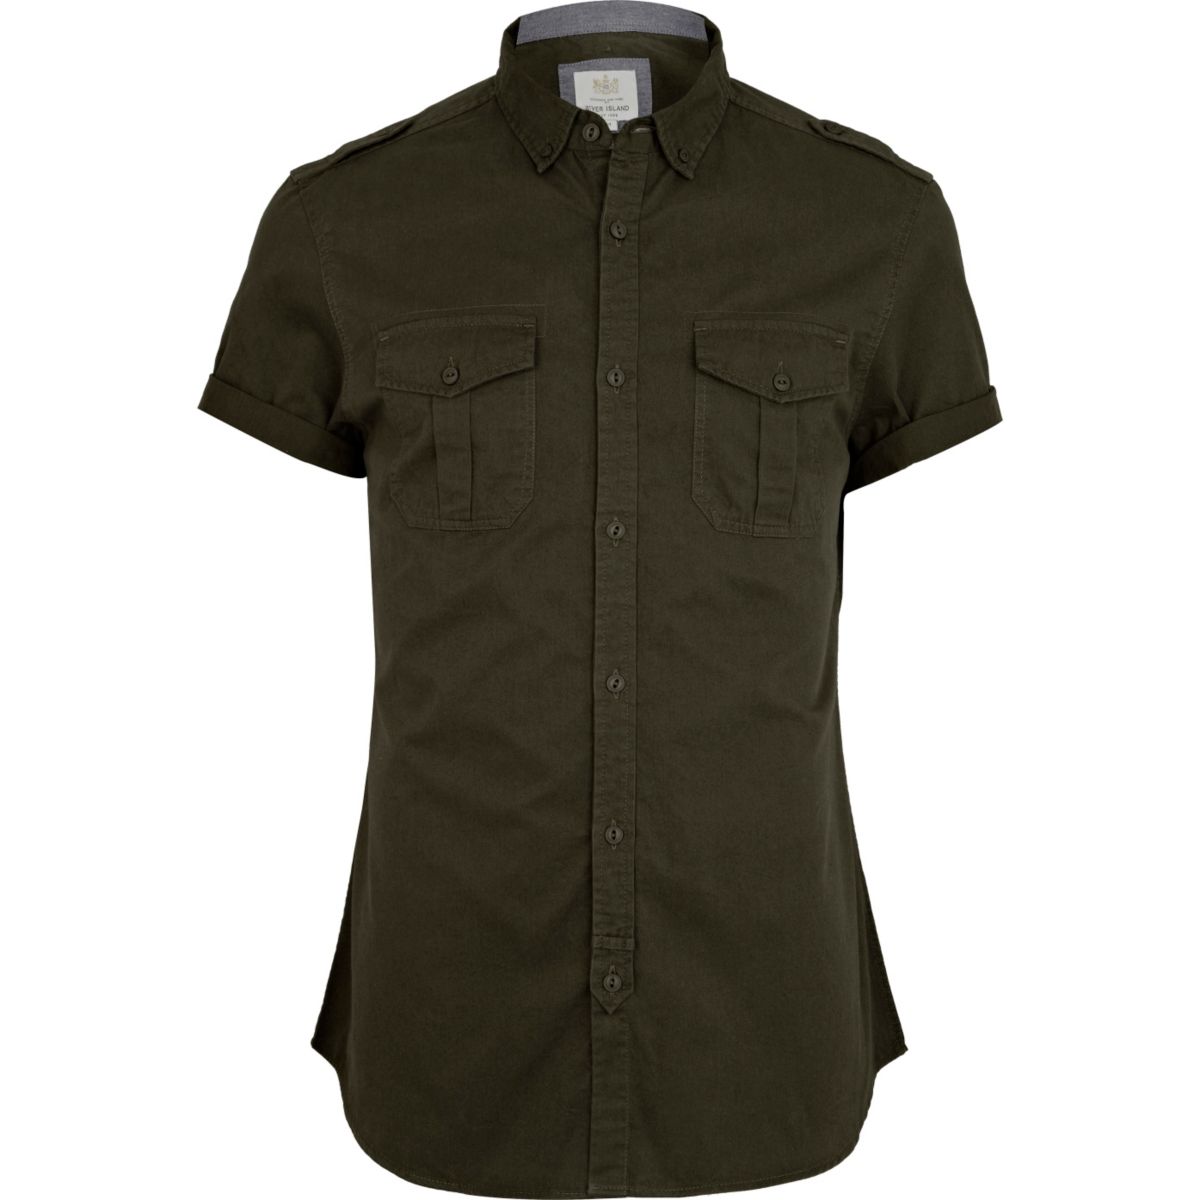 Green military short sleeve shirt - Shirts - Sale - men